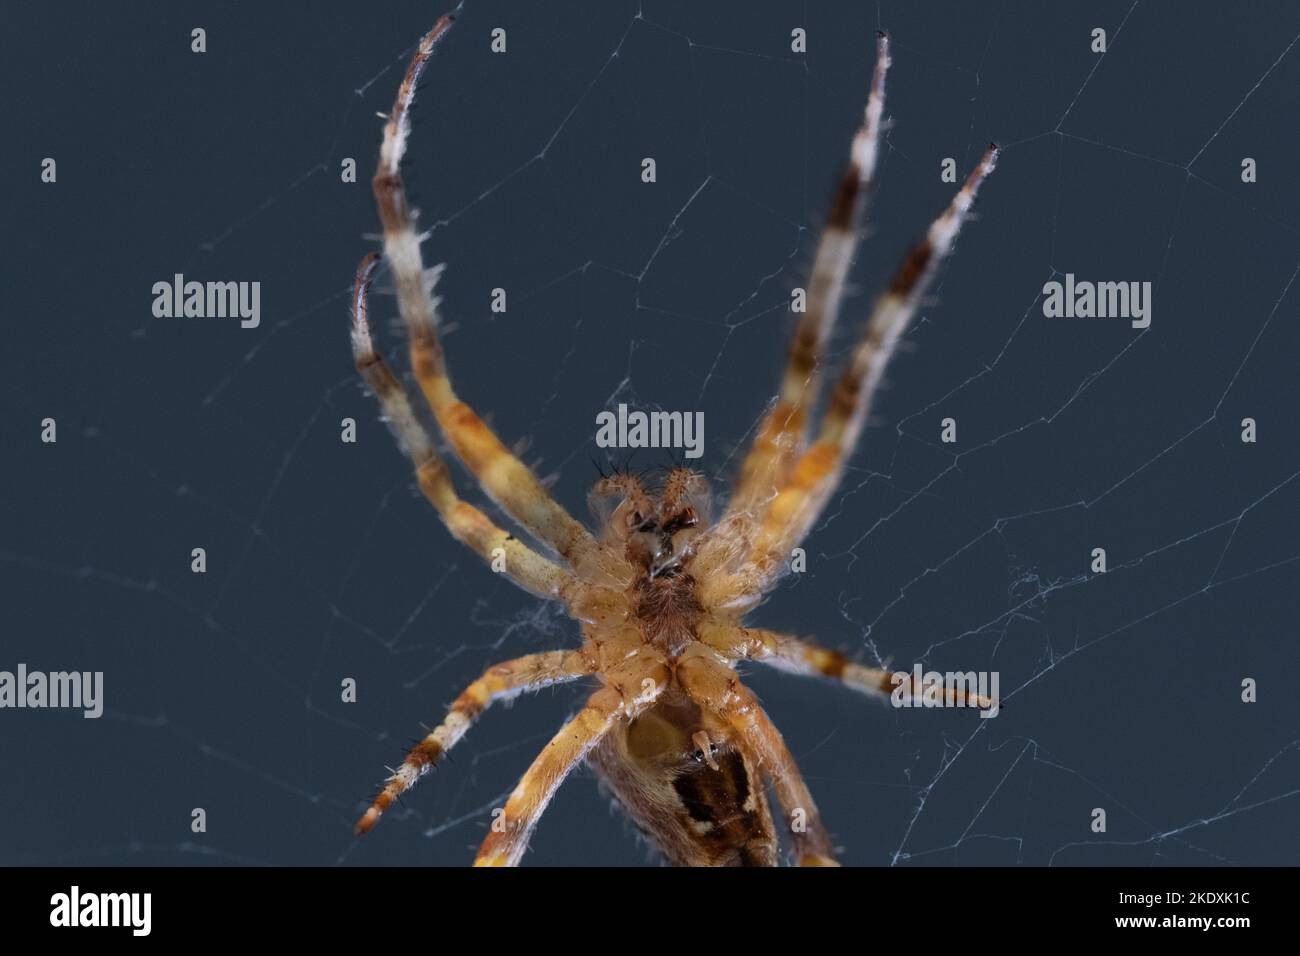 spider macro shot isolated on dark background Stock Photo